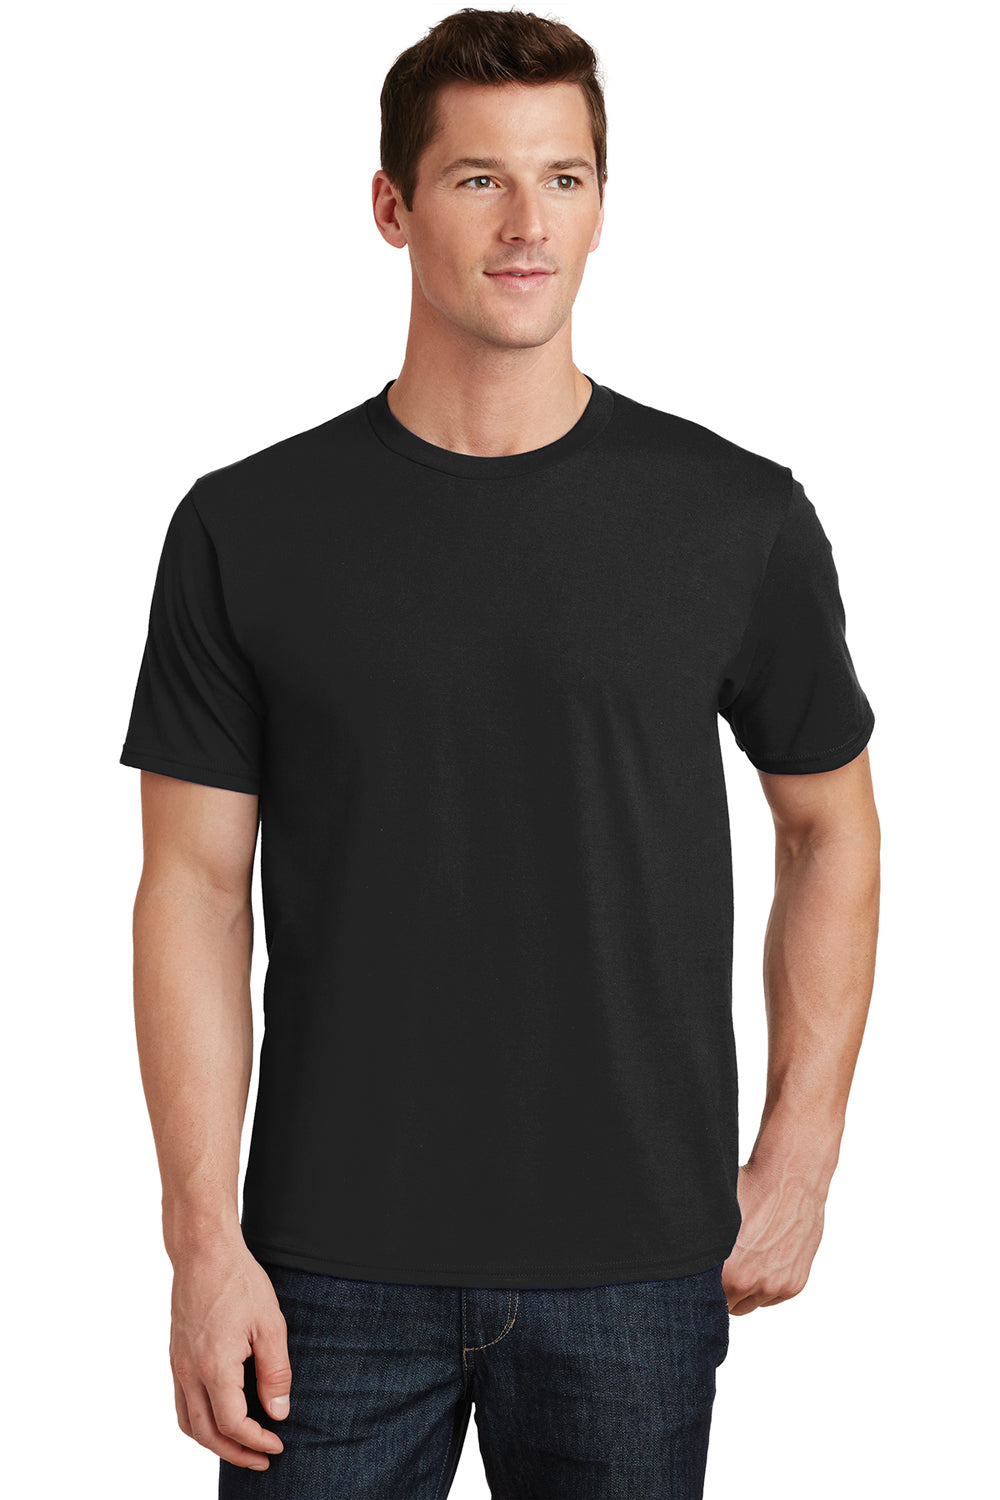 Port & Company PC450 Mens Fan Favorite Short Sleeve Crewneck T-Shirt Black Front